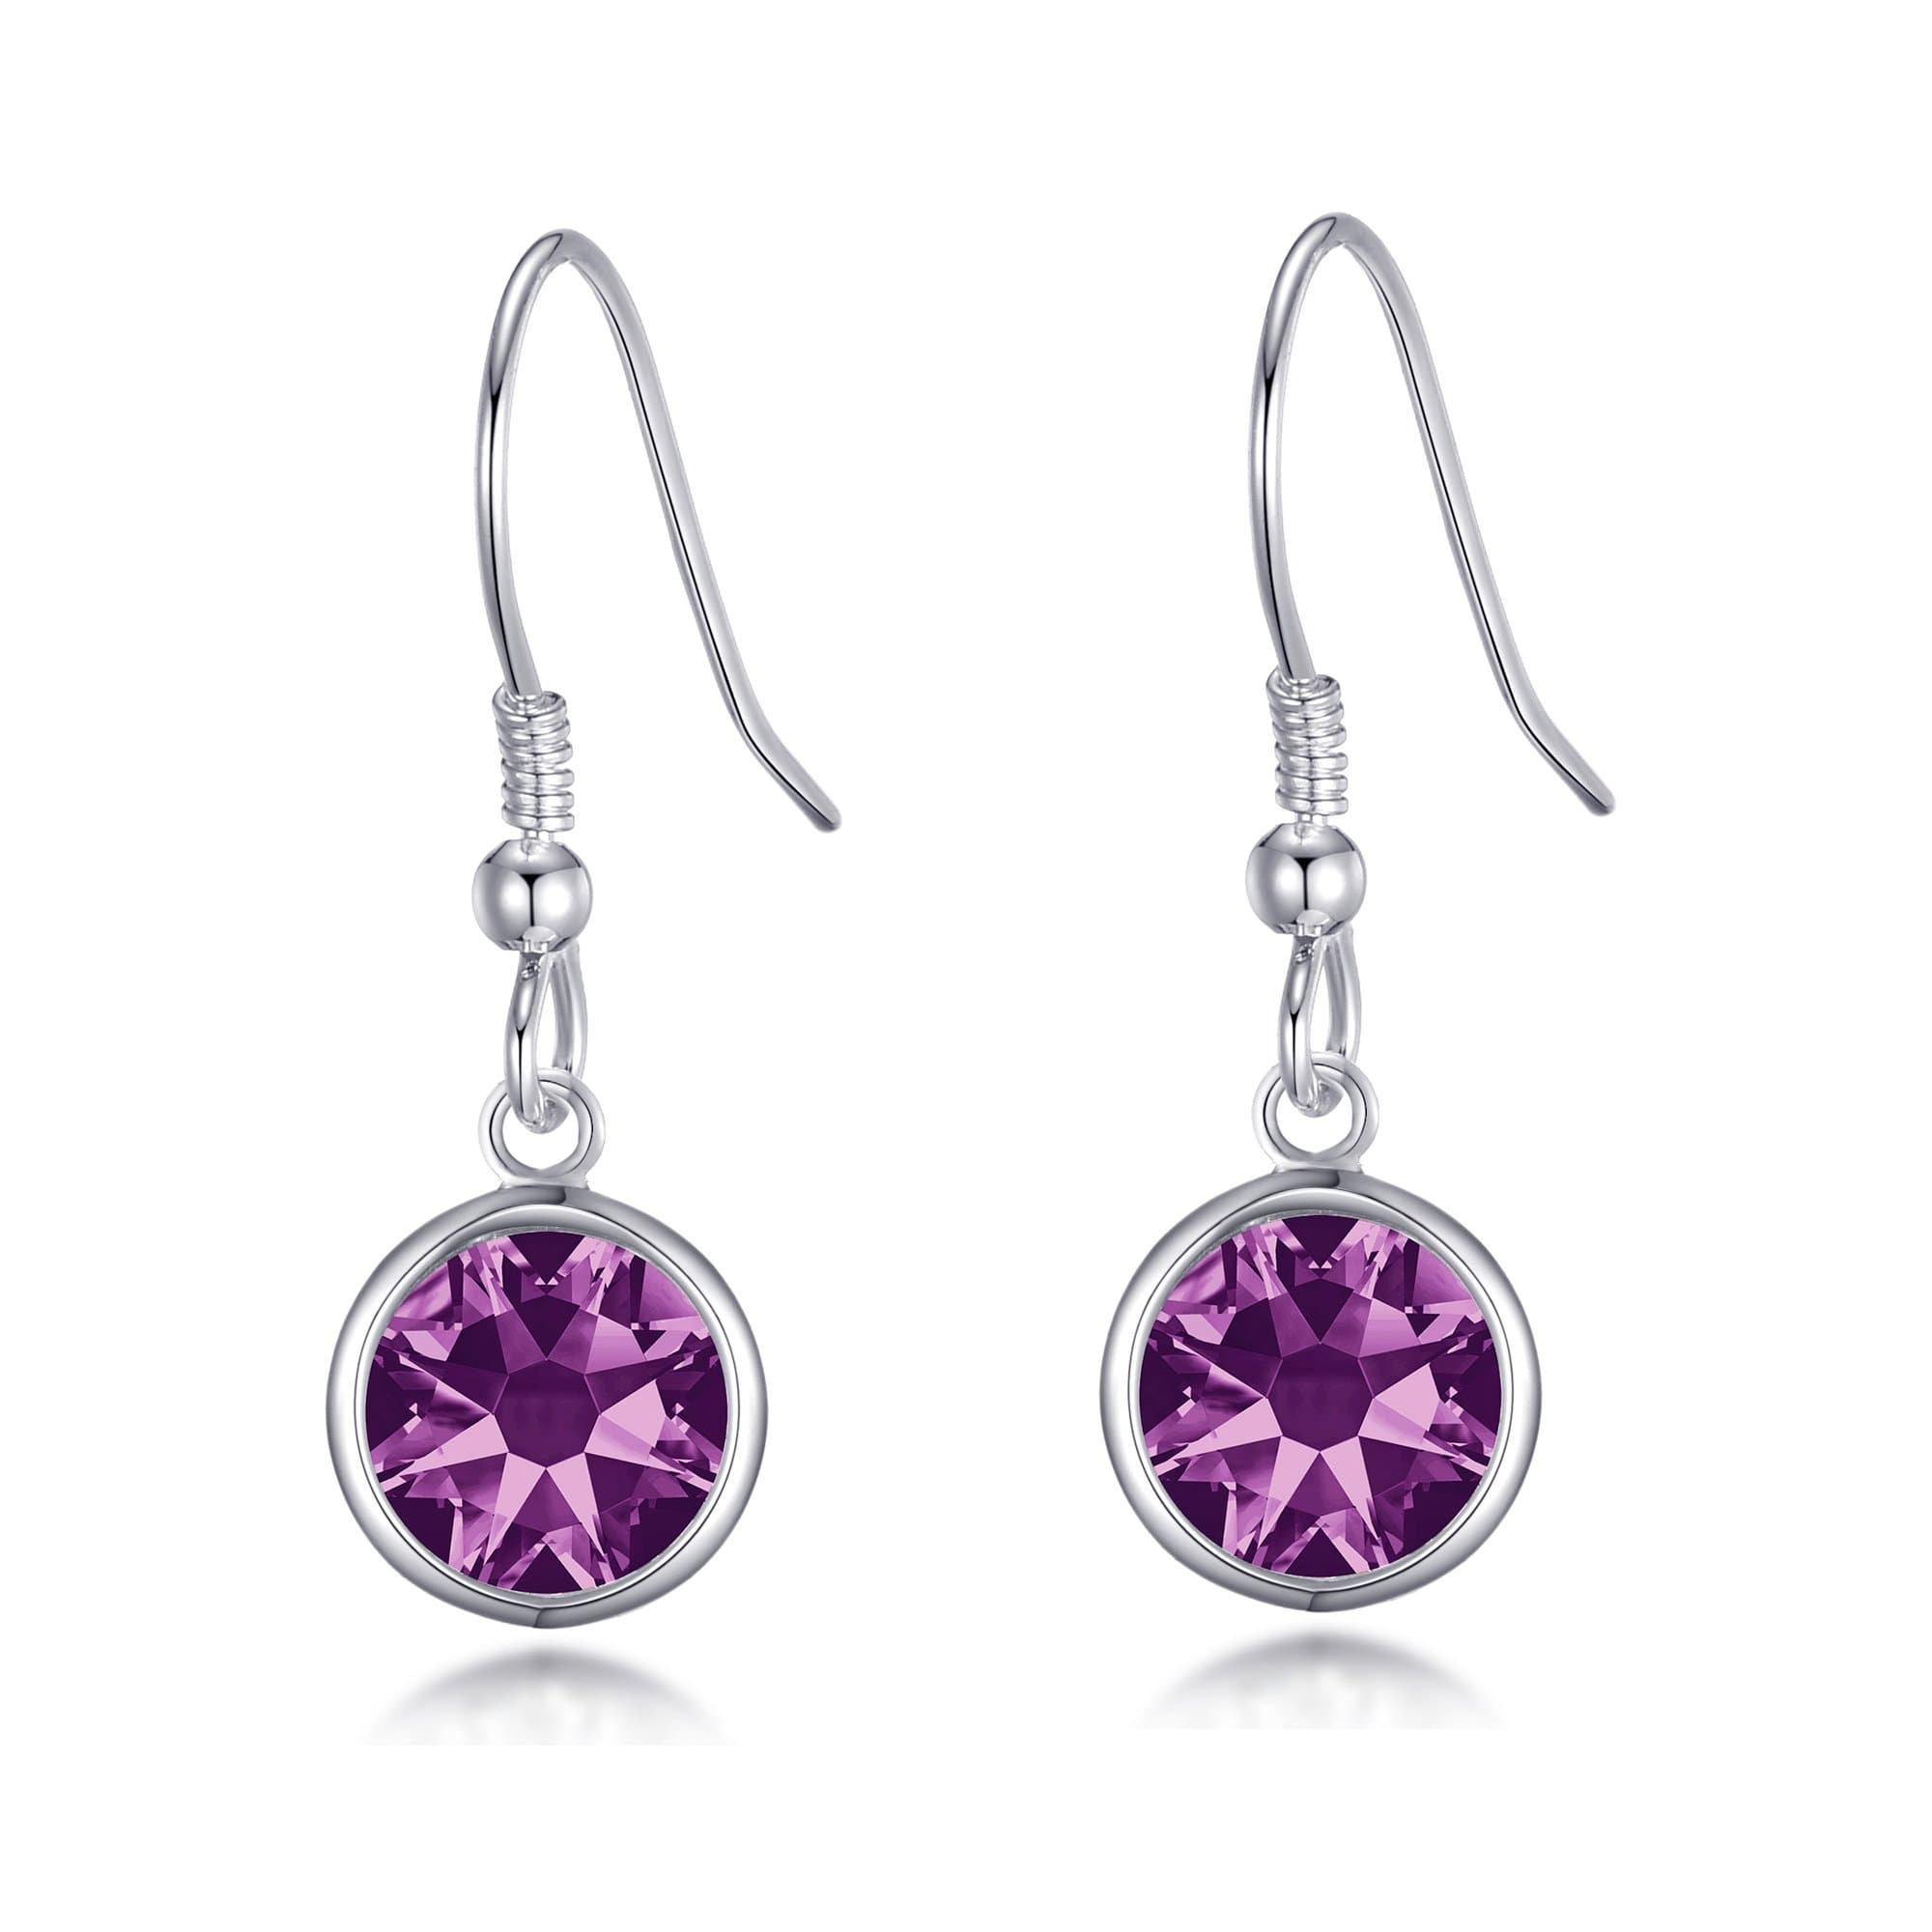 Purple Crystal Drop Earrings Created with Zircondia® Crystals by Philip Jones Jewellery